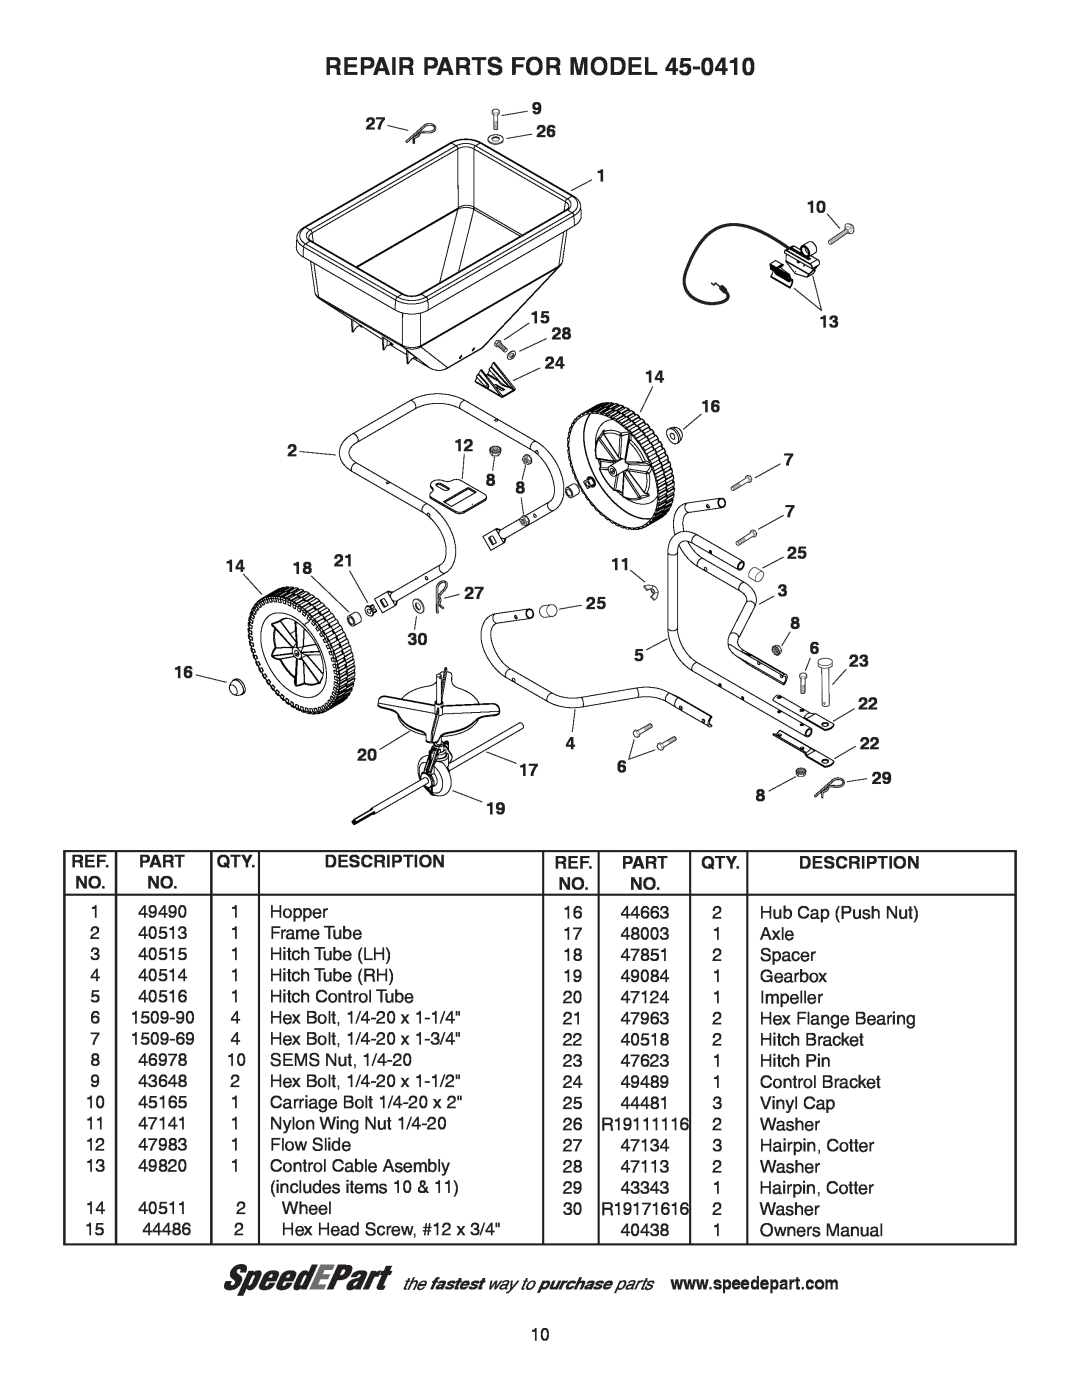 Agri-Fab 45-0410 owner manual Repair Parts For Model, Description 